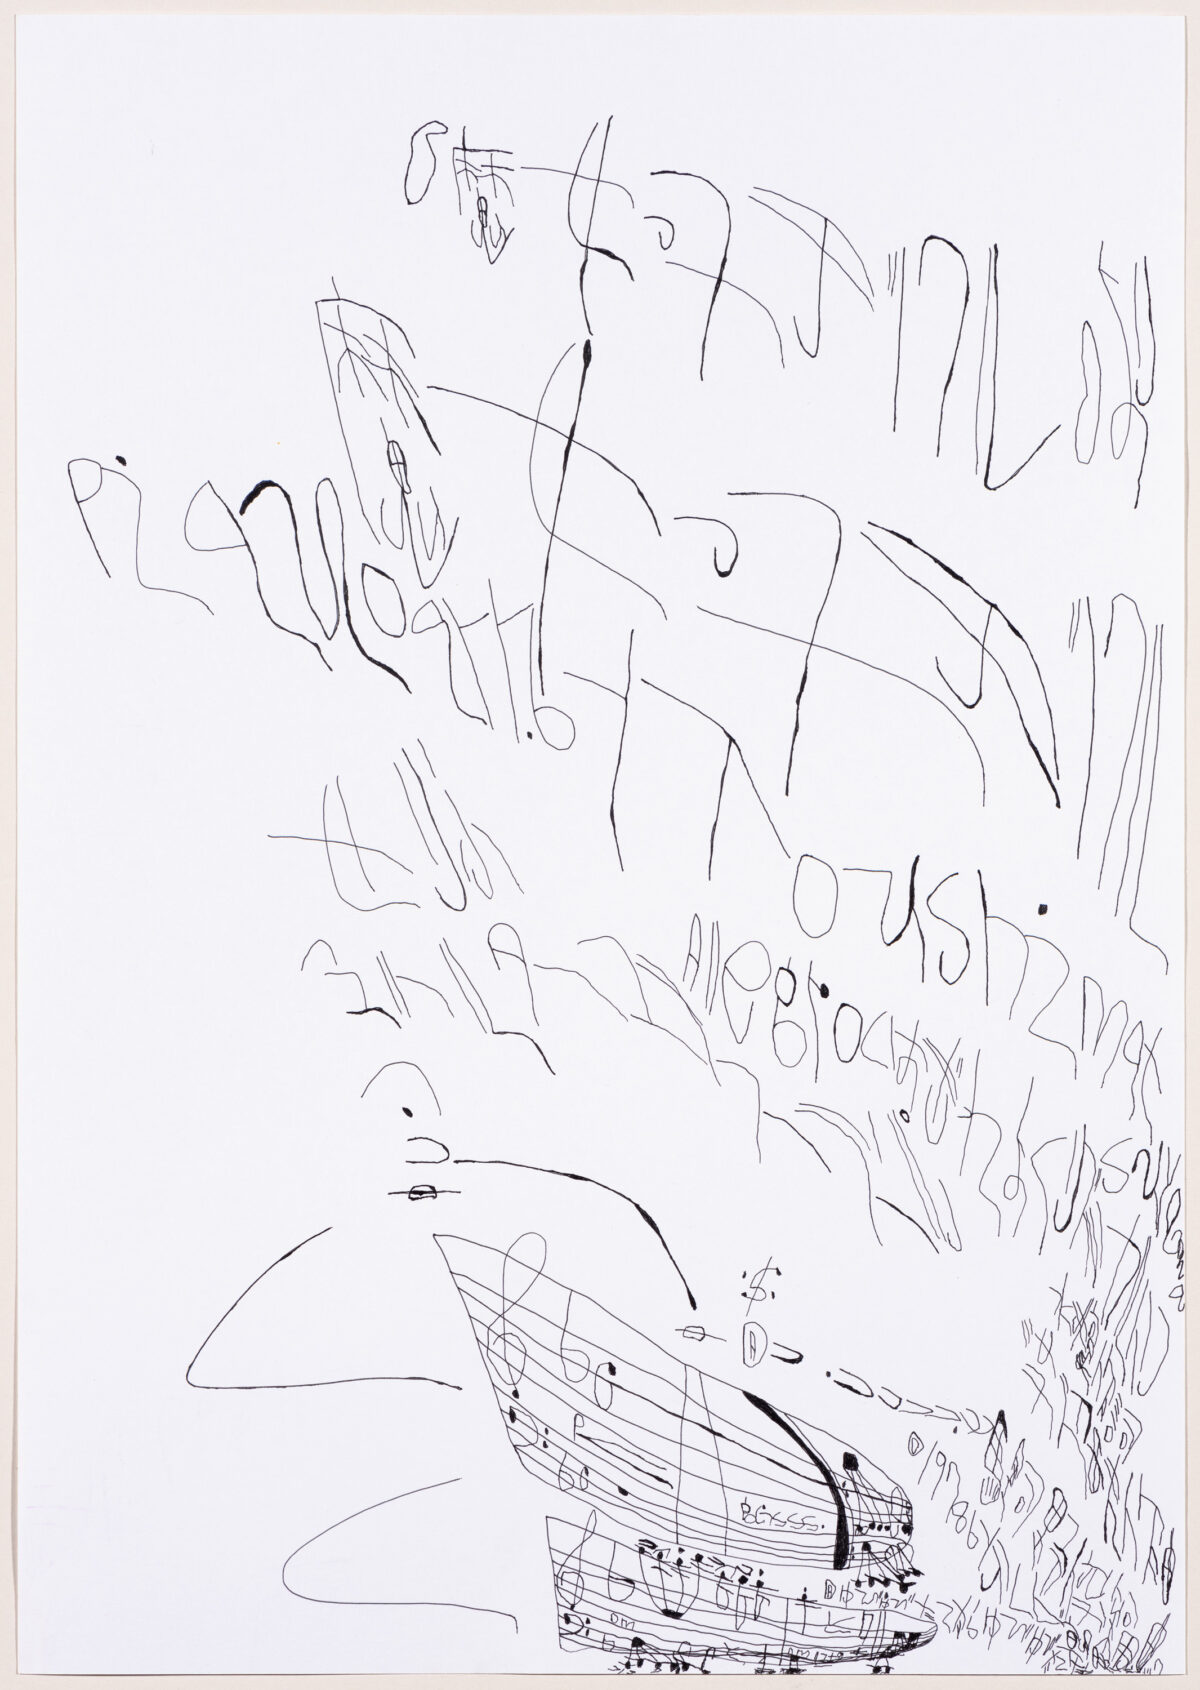 Koji Untitled 54 x 38 cm pen on paper